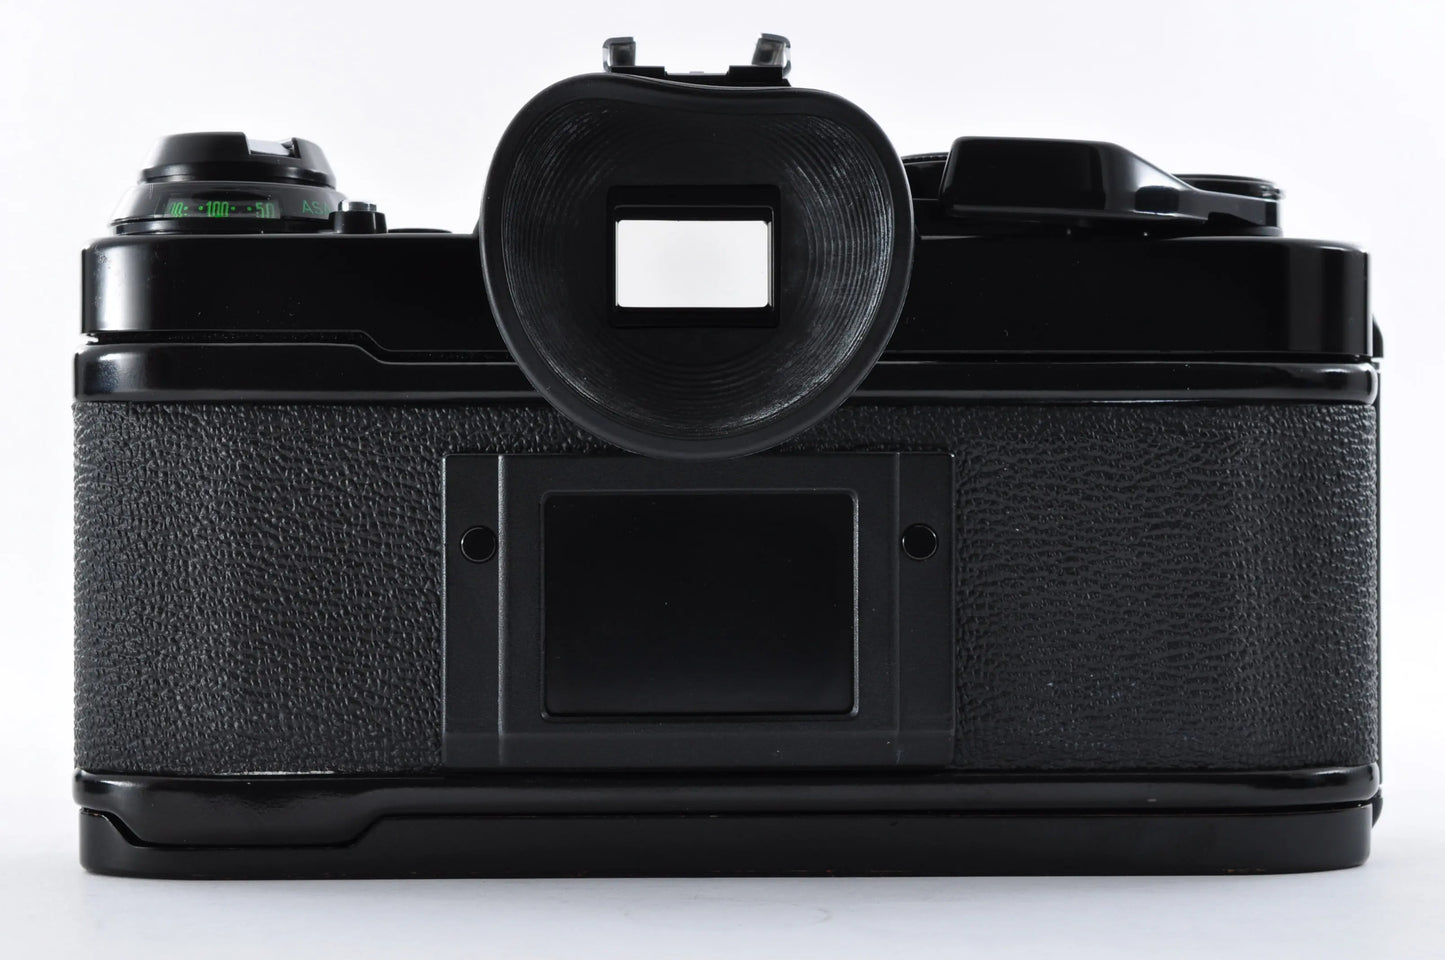 Canon AE-1 Program Black 35mm SLR Film Camera w/Power Winder A2 From Japan #3548282